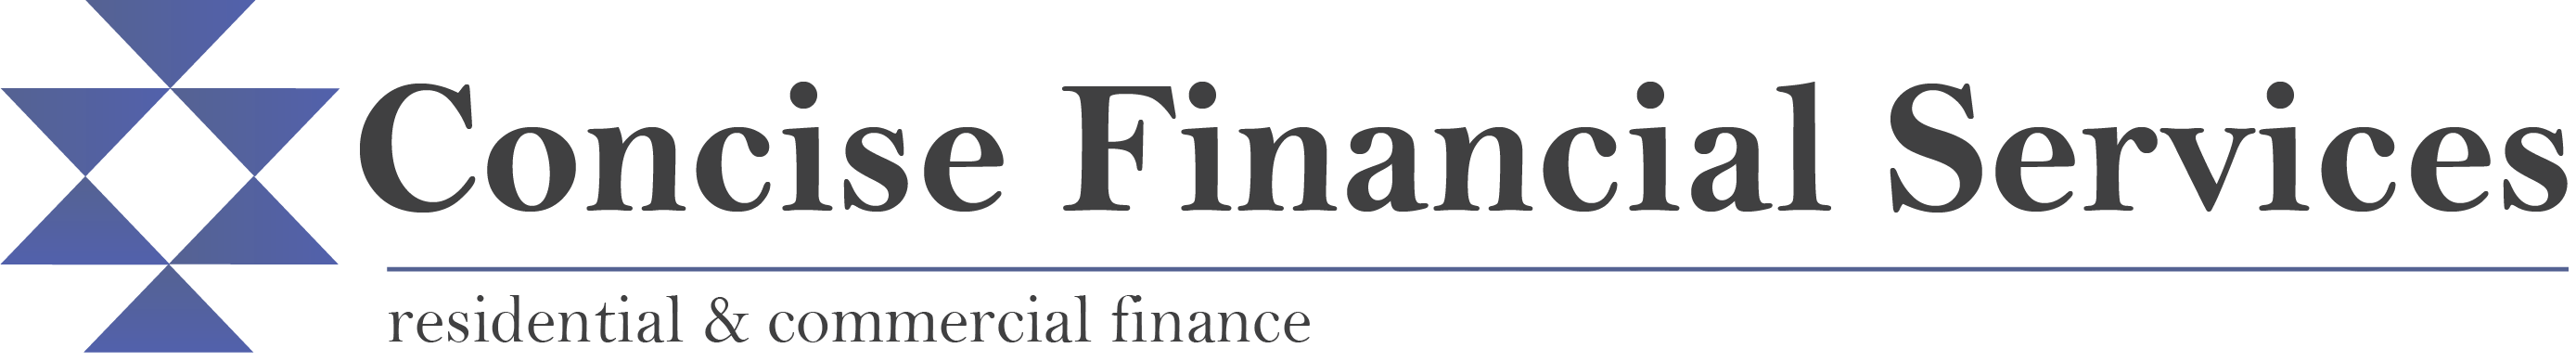 Concise Financial Services